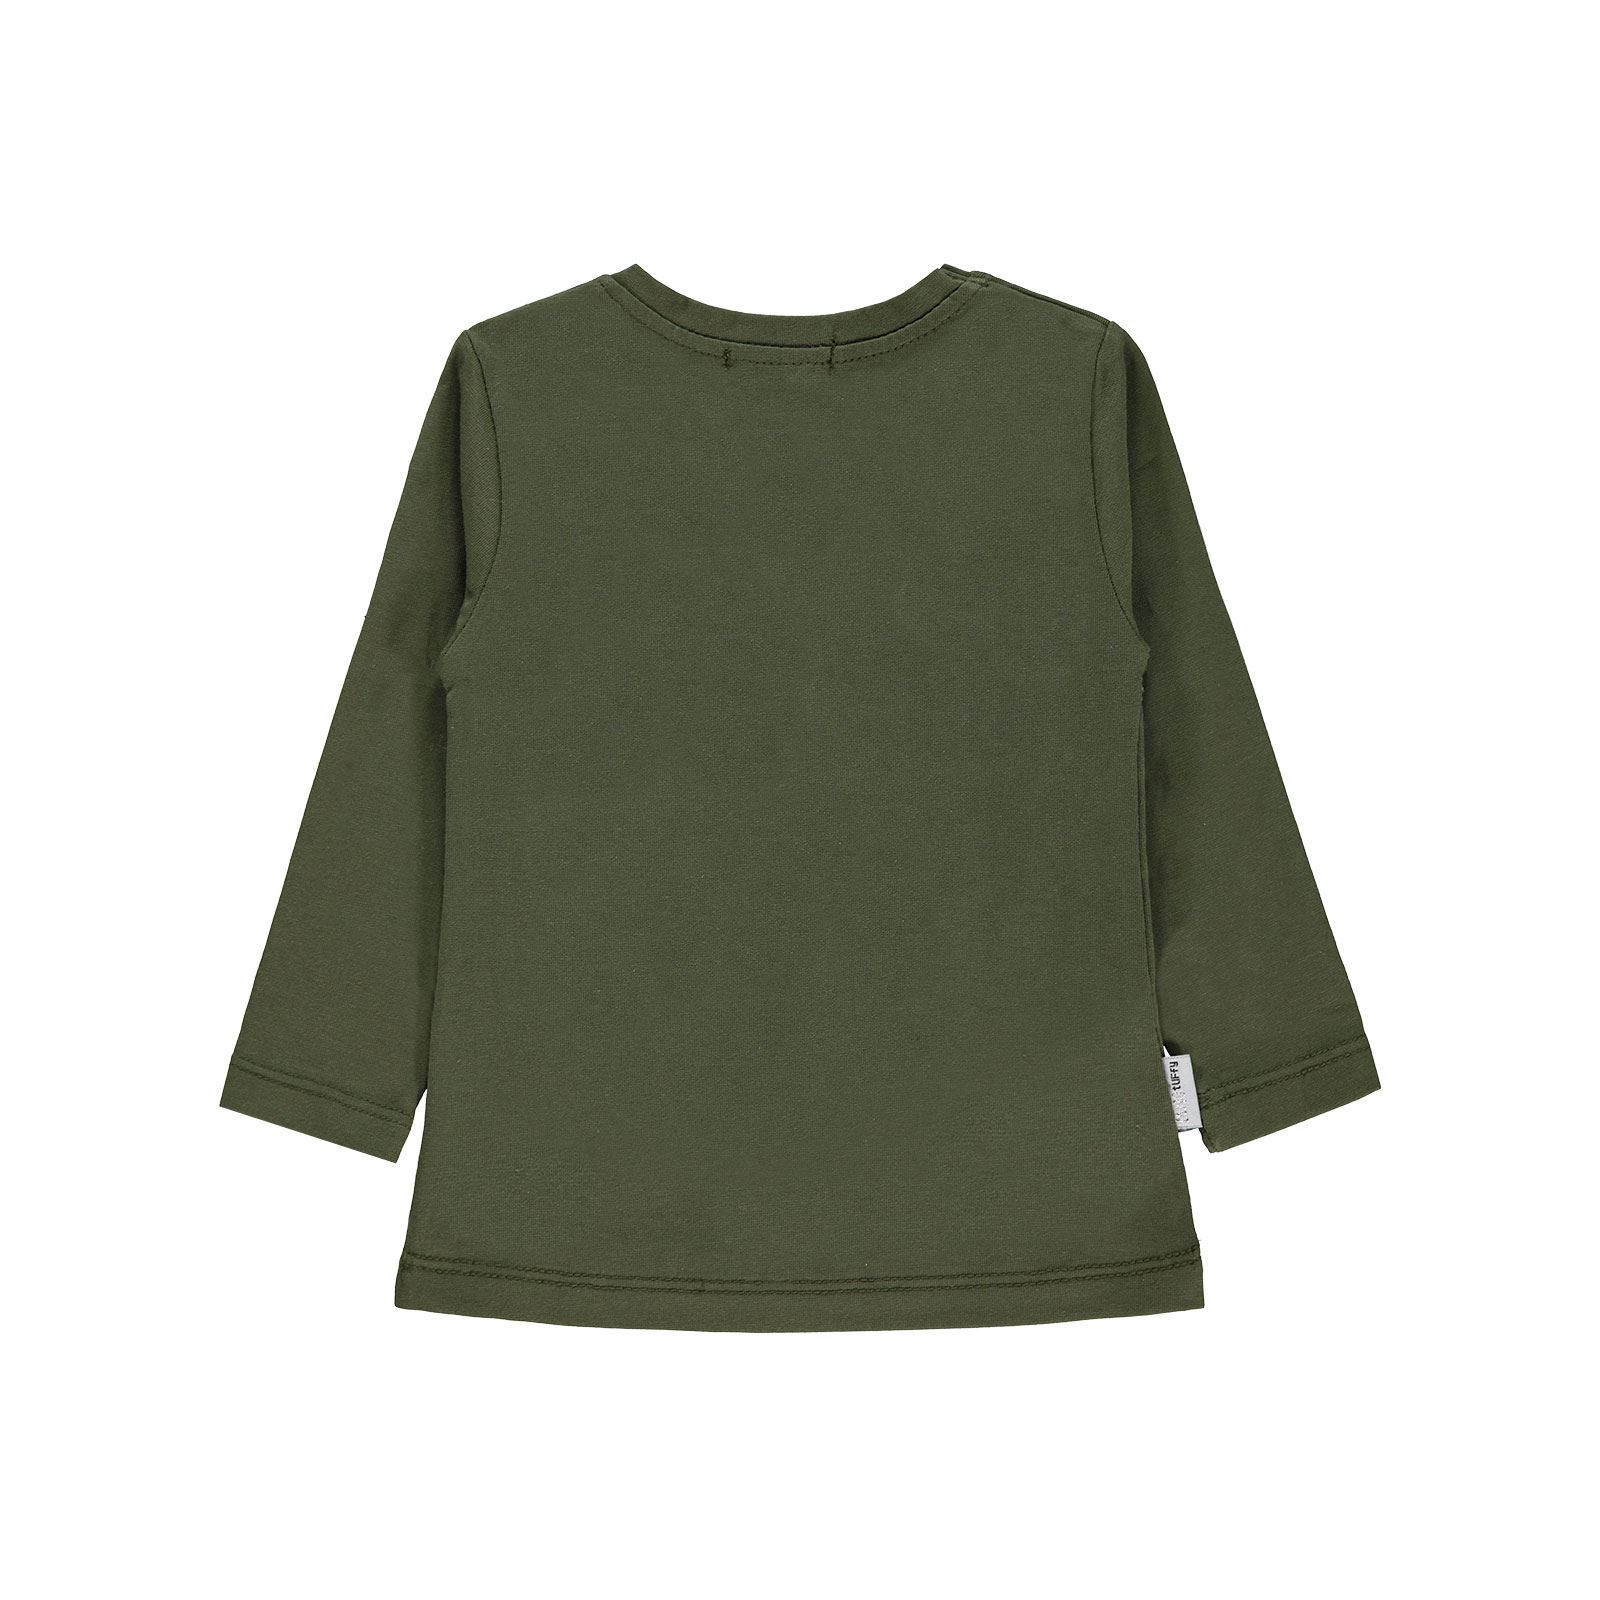 Tuffy Kız Çocuk Sweatshirt 1-4 Yaş Yeşil